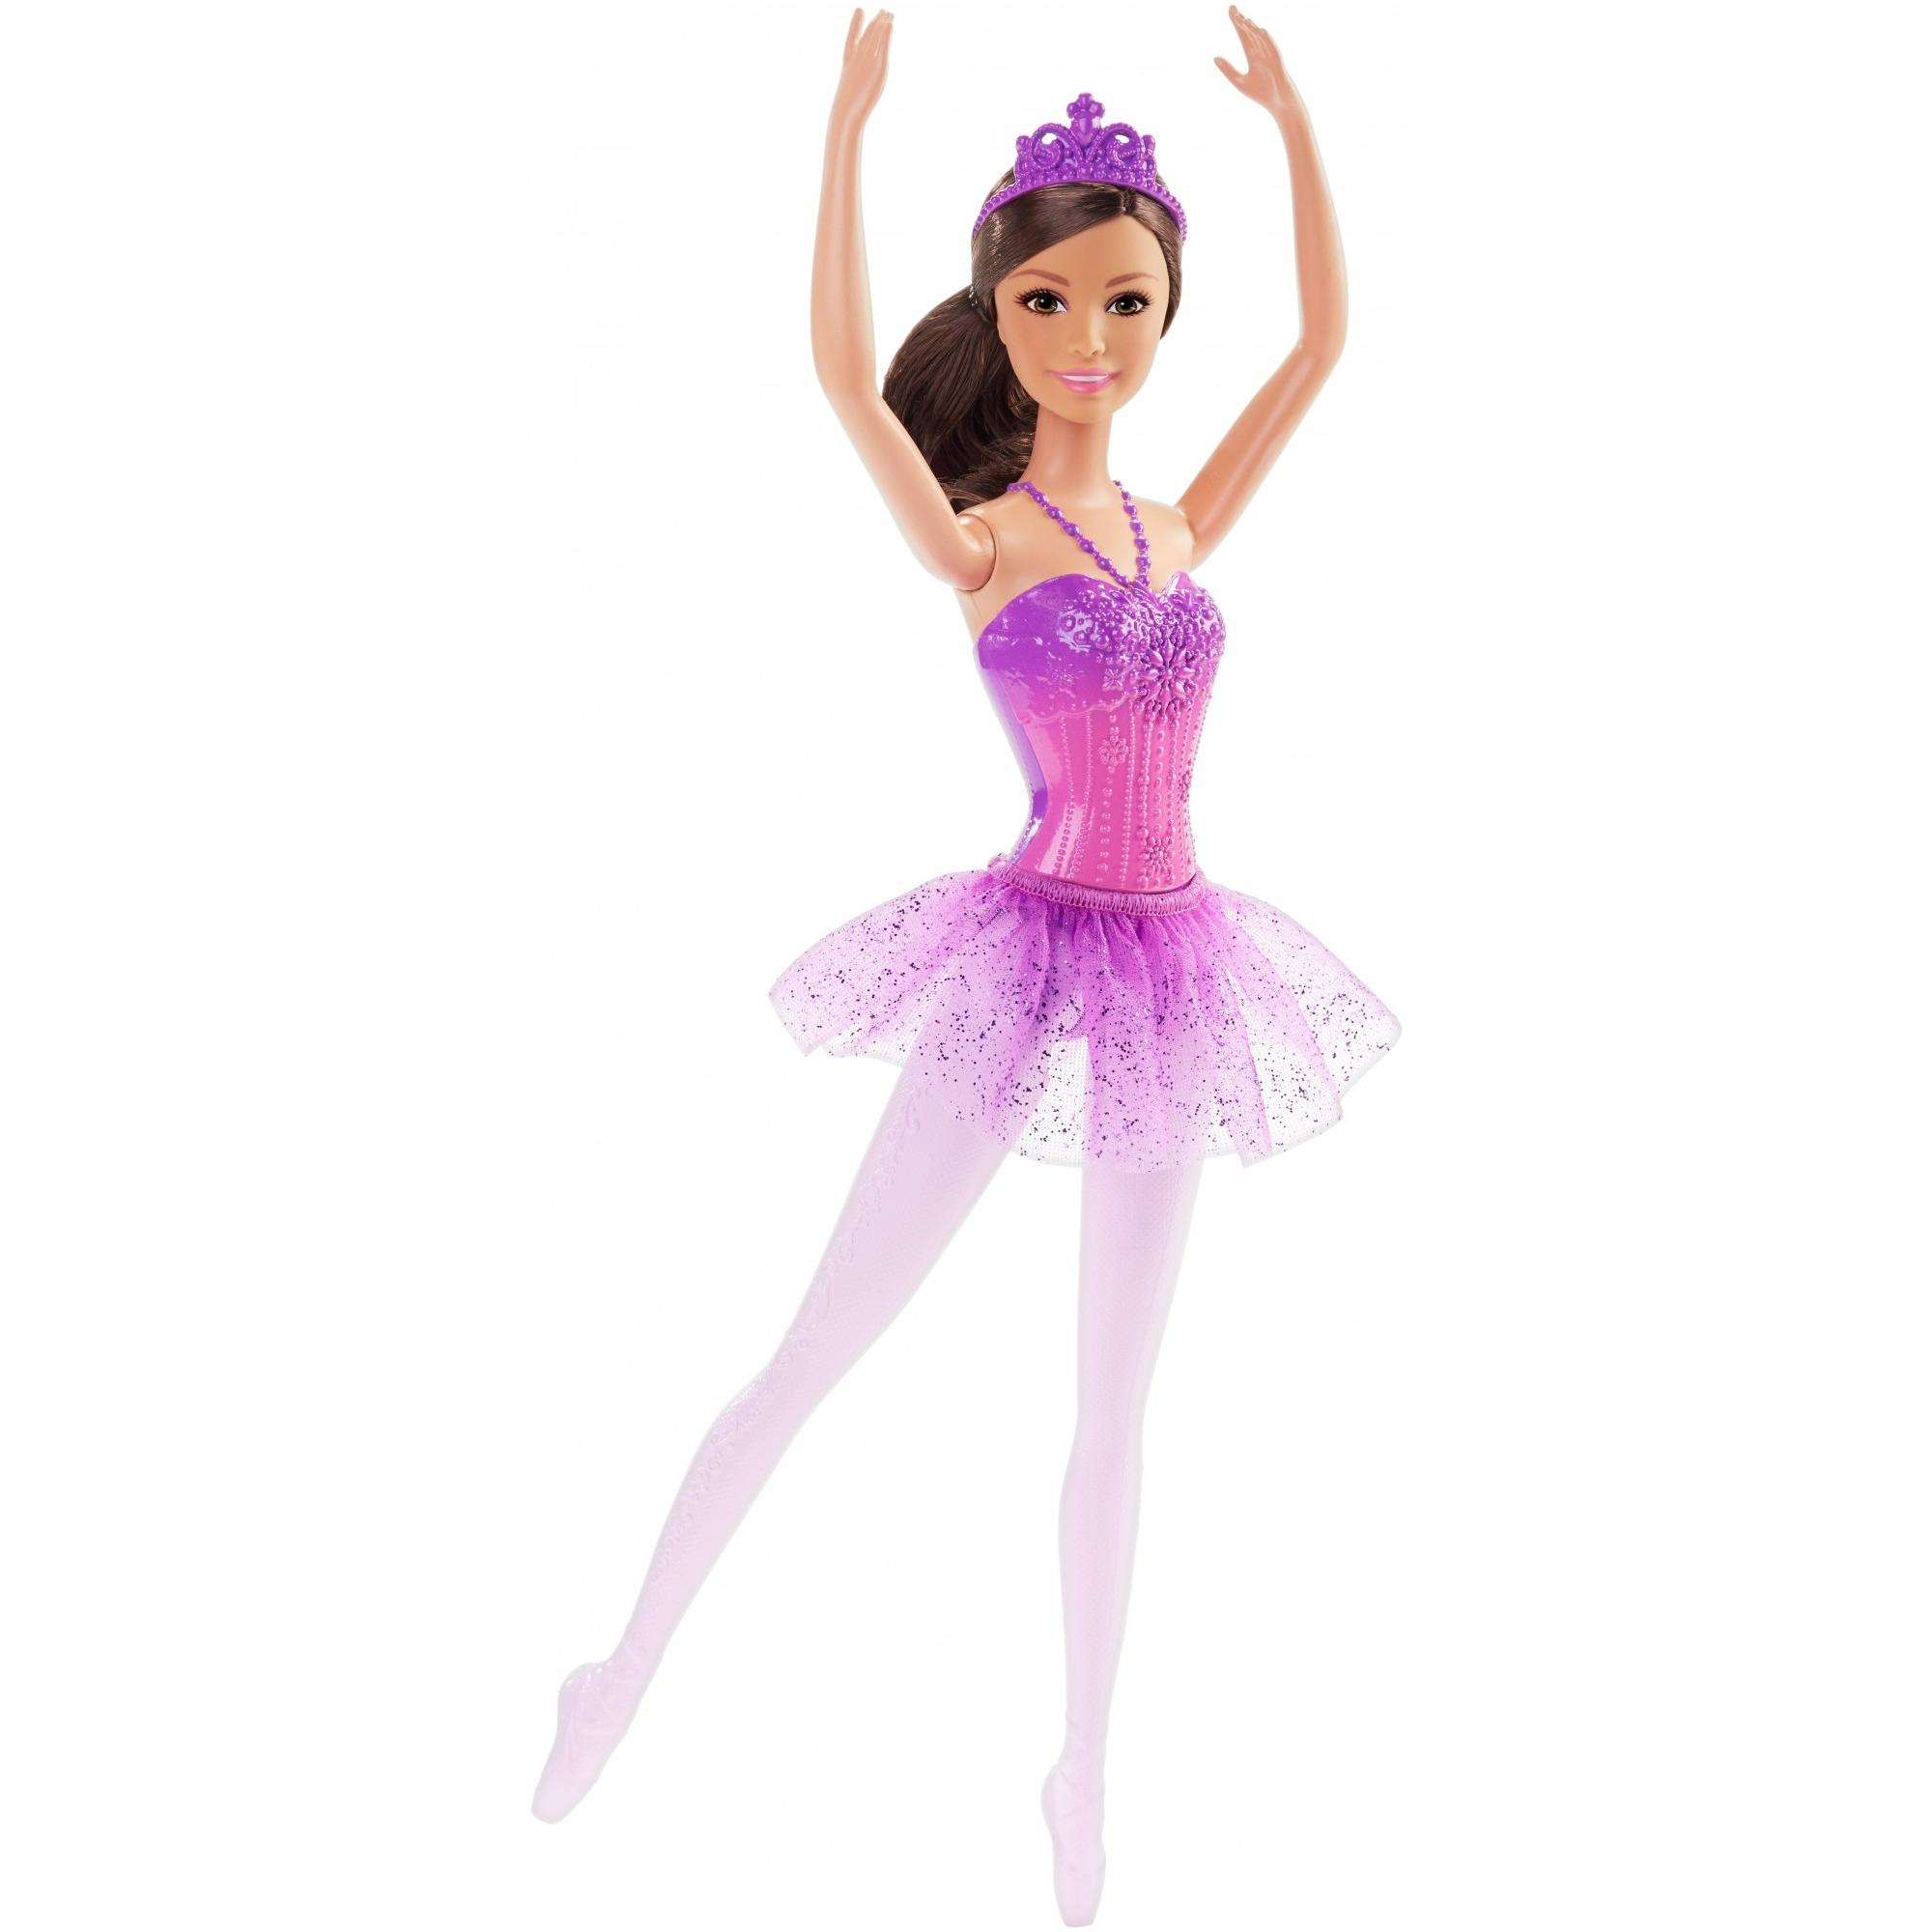 Barbie Ballerina Doll with Removable Purple Tutu & Tiara - image 1 of 6